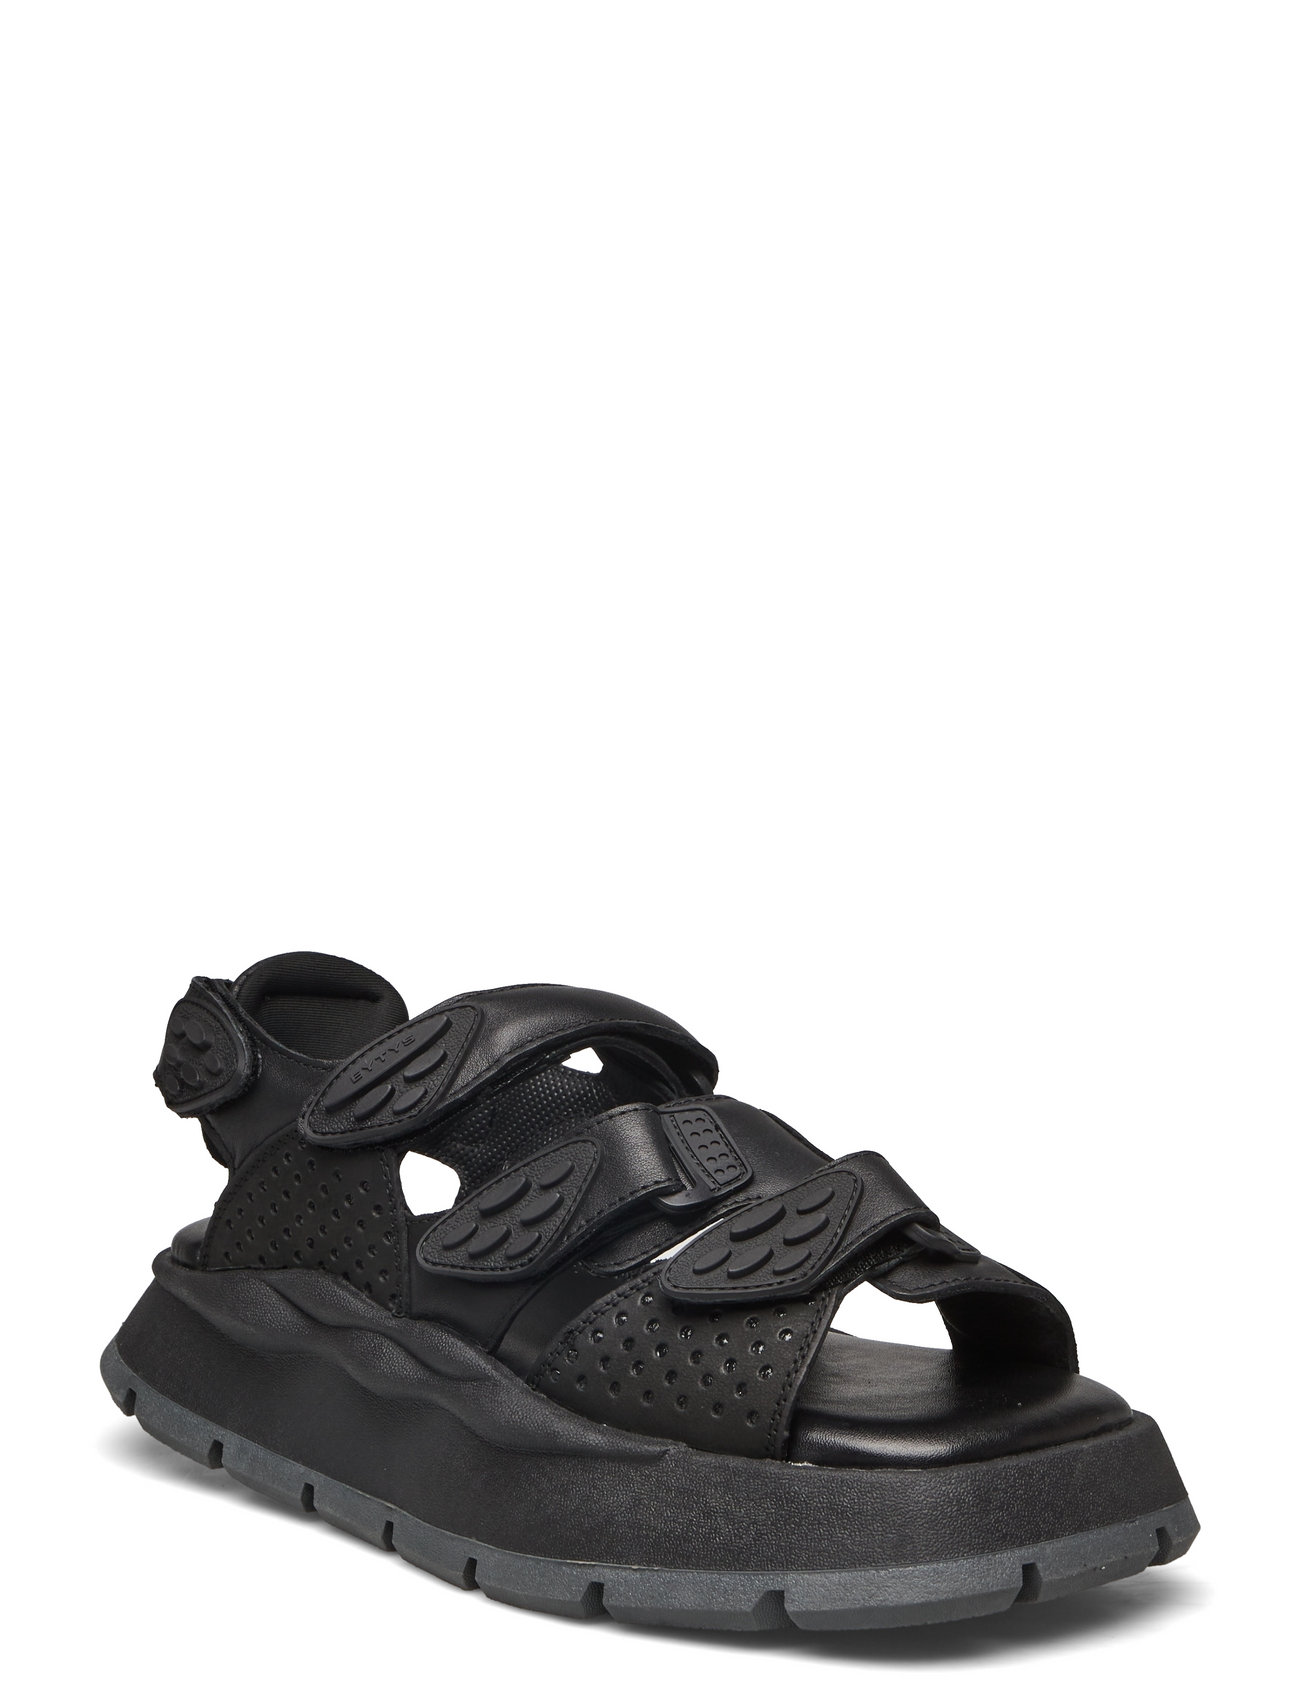 Quest Leather Black Designers Summer Shoes Sandals Black EYTYS